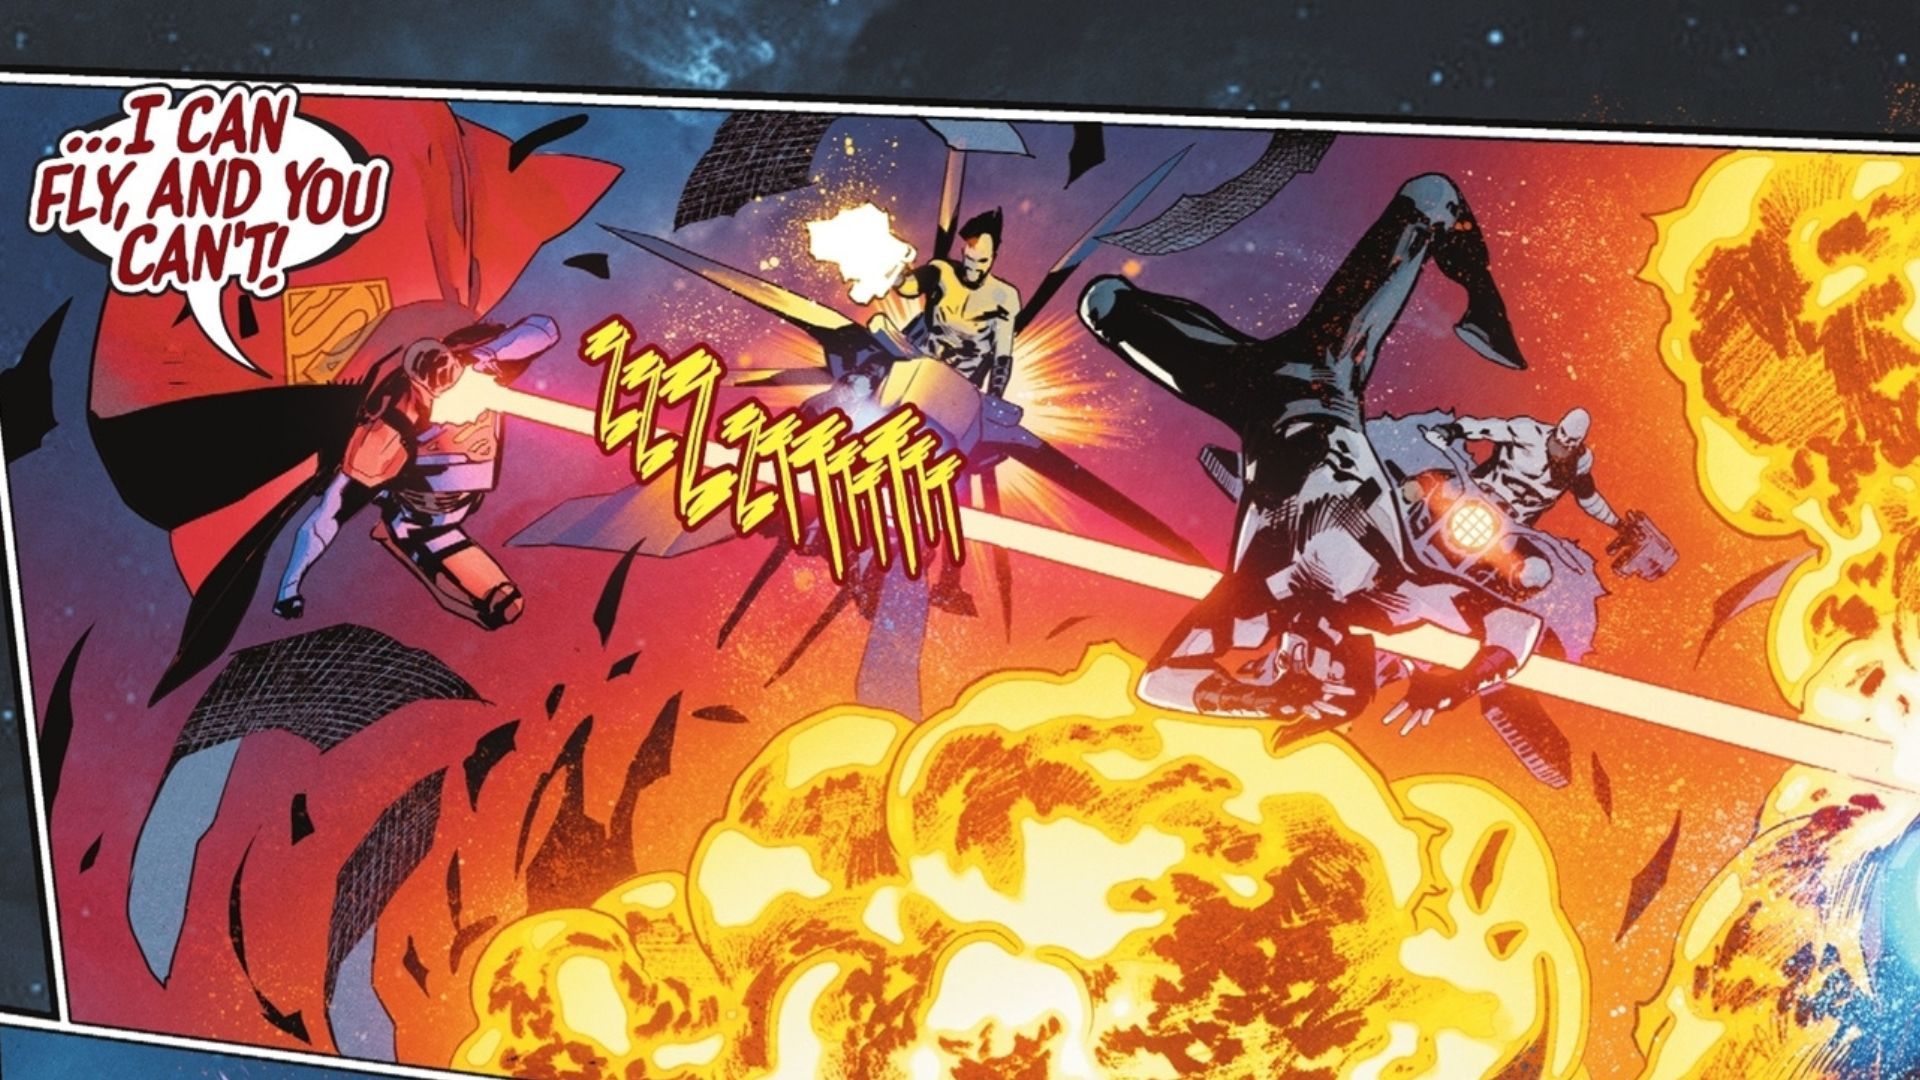 Superman luta contra czarnianos no espaço, Action Comics #1064